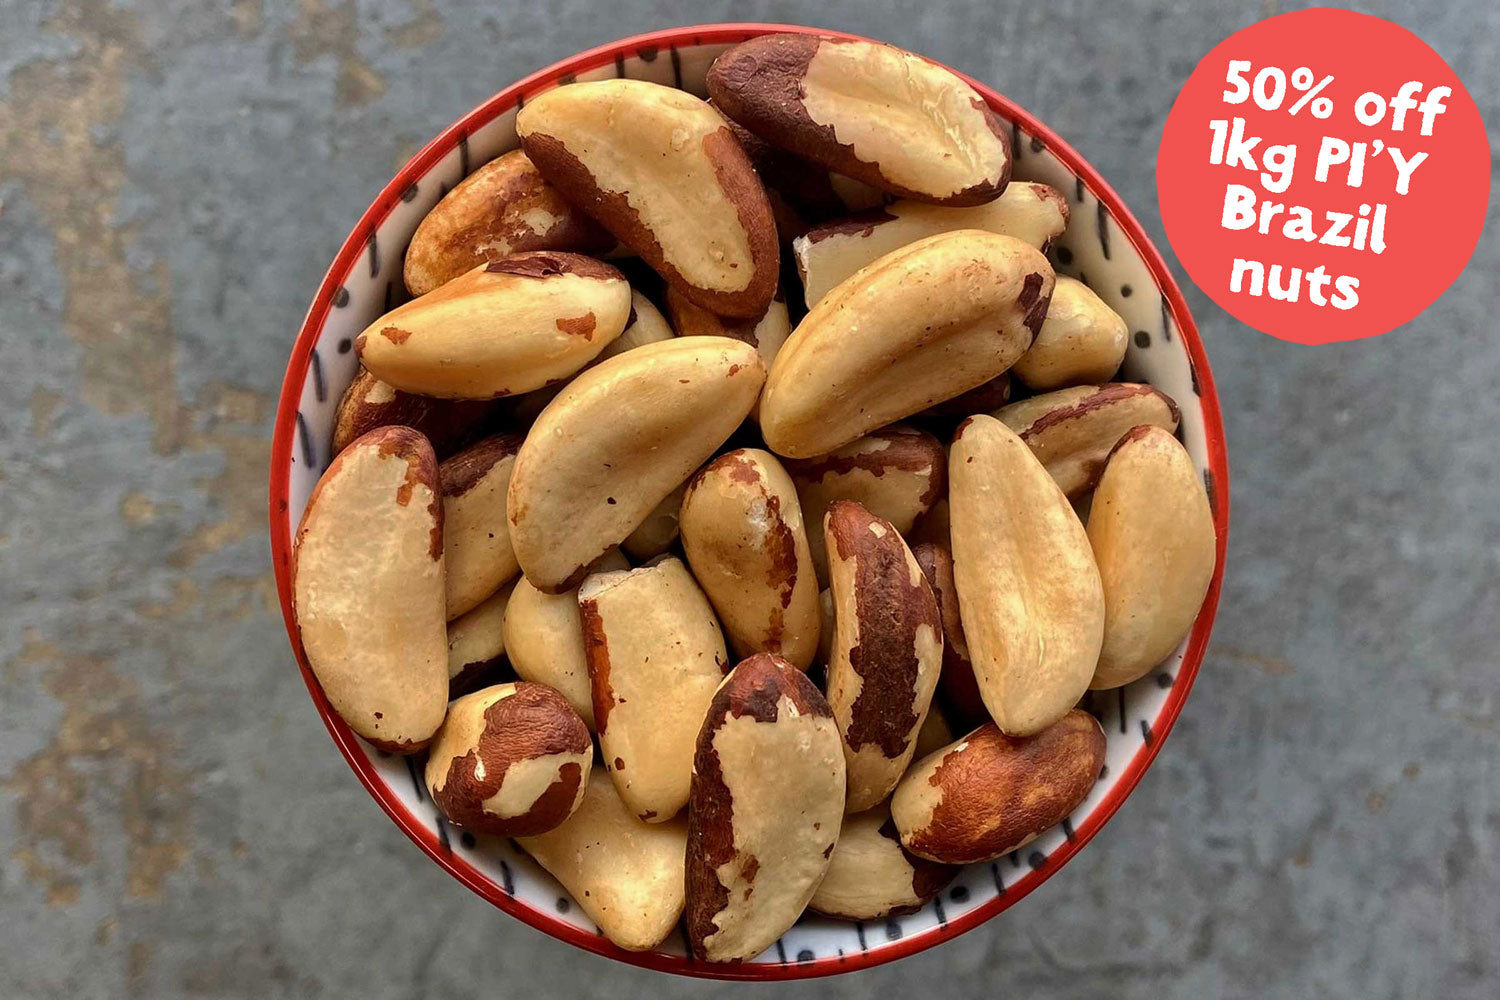 PI'Y Brazil Nuts - 50% off 1kg